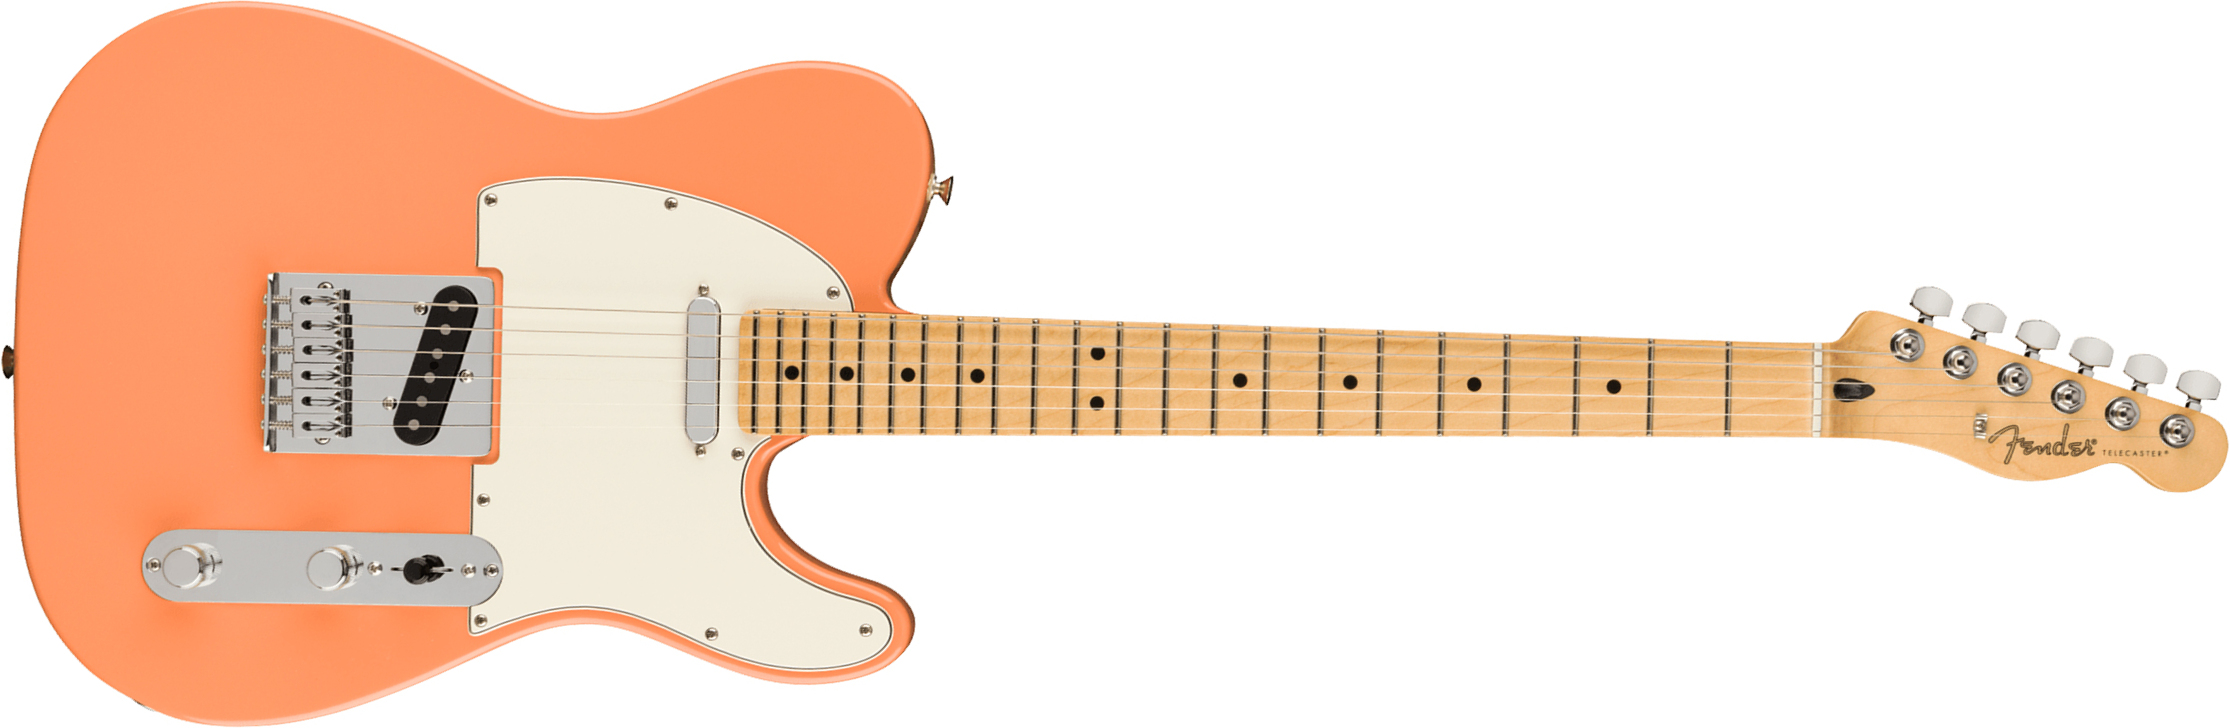 Fender Tele Player Ltd Mex 2s Ht Mn - Pacific Peach - Guitarra eléctrica con forma de tel - Main picture